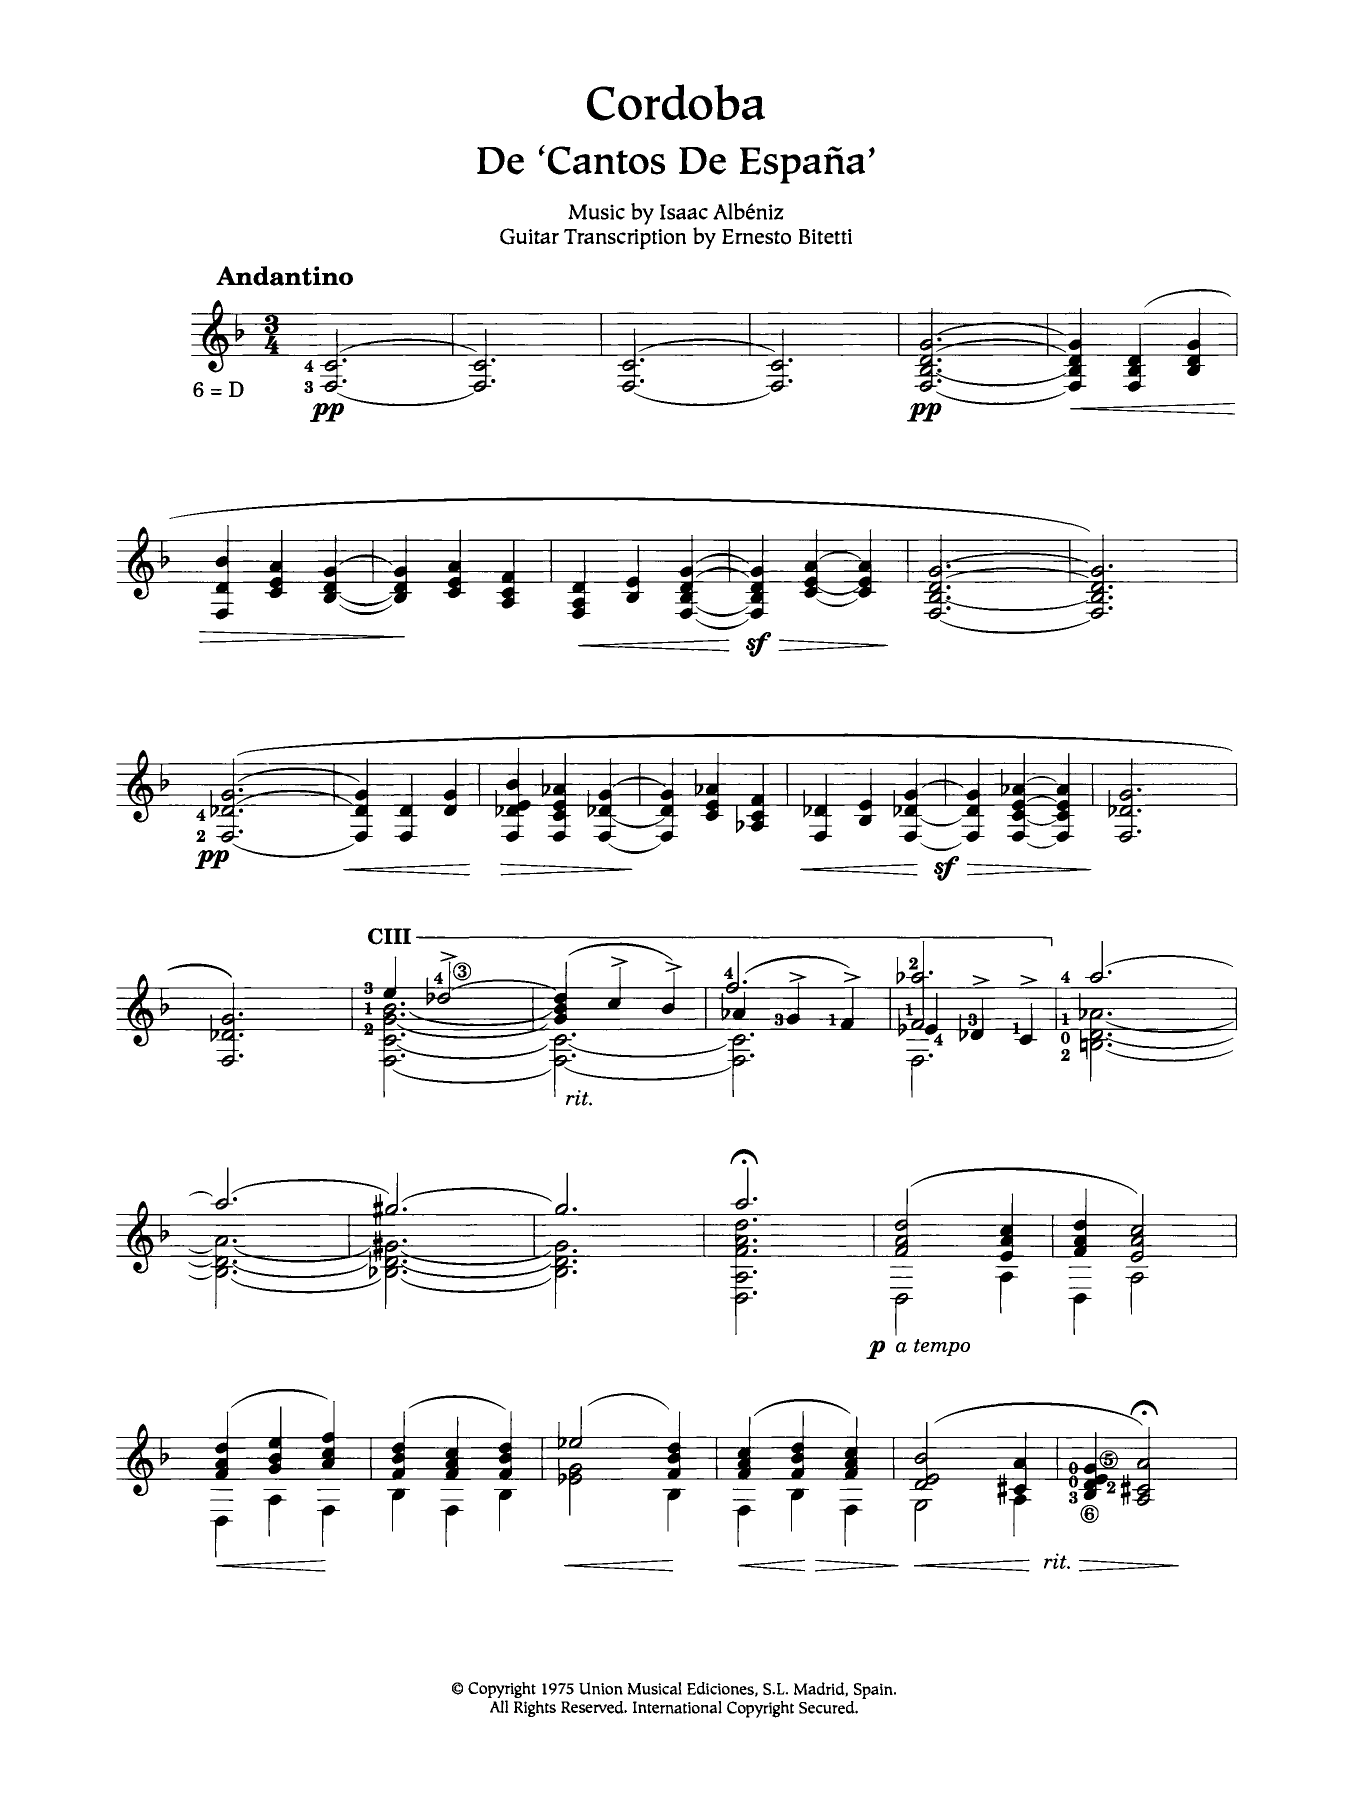 Isaac Albéniz Cordoba Sheet Music Notes & Chords for Guitar - Download or Print PDF